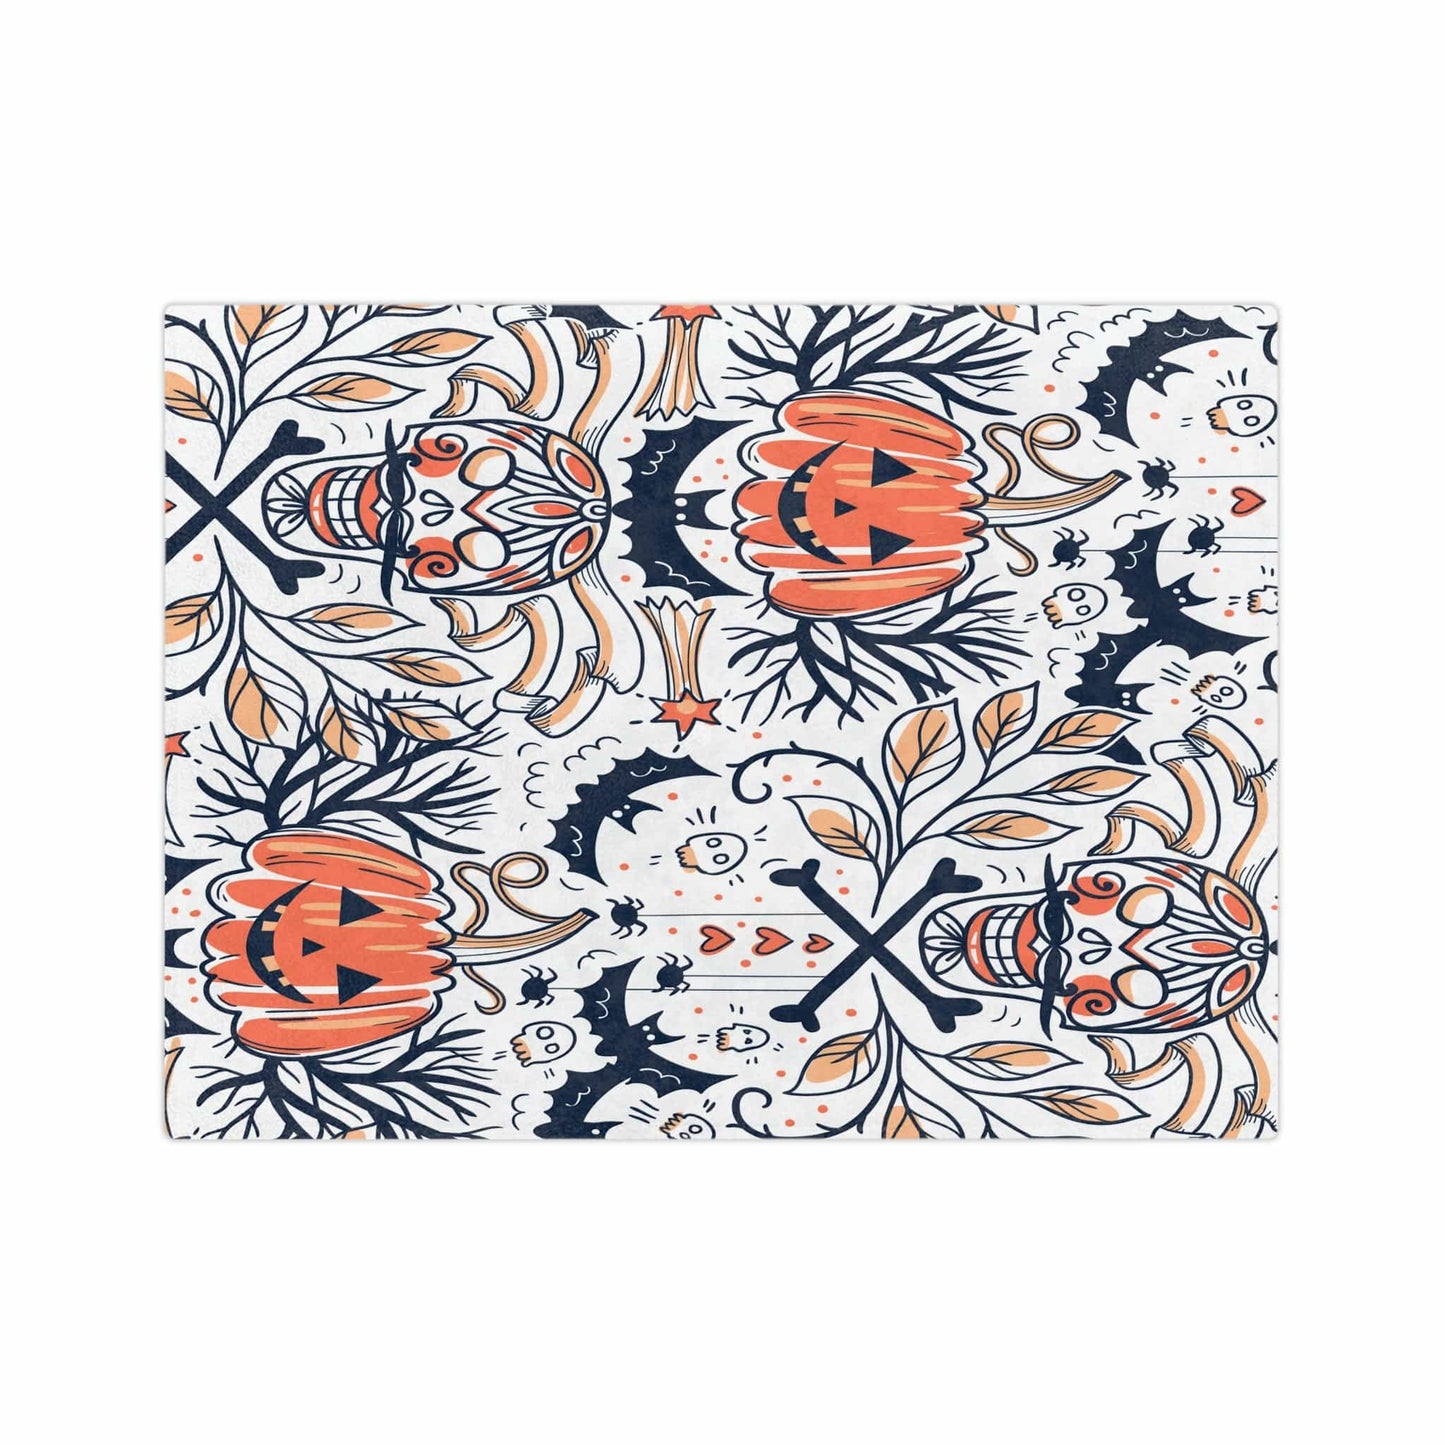 Kate McEnroe New York Skull and Pumpkin Halloween Bats Spiders Spooky Skeleton Throw Blanket Blankets